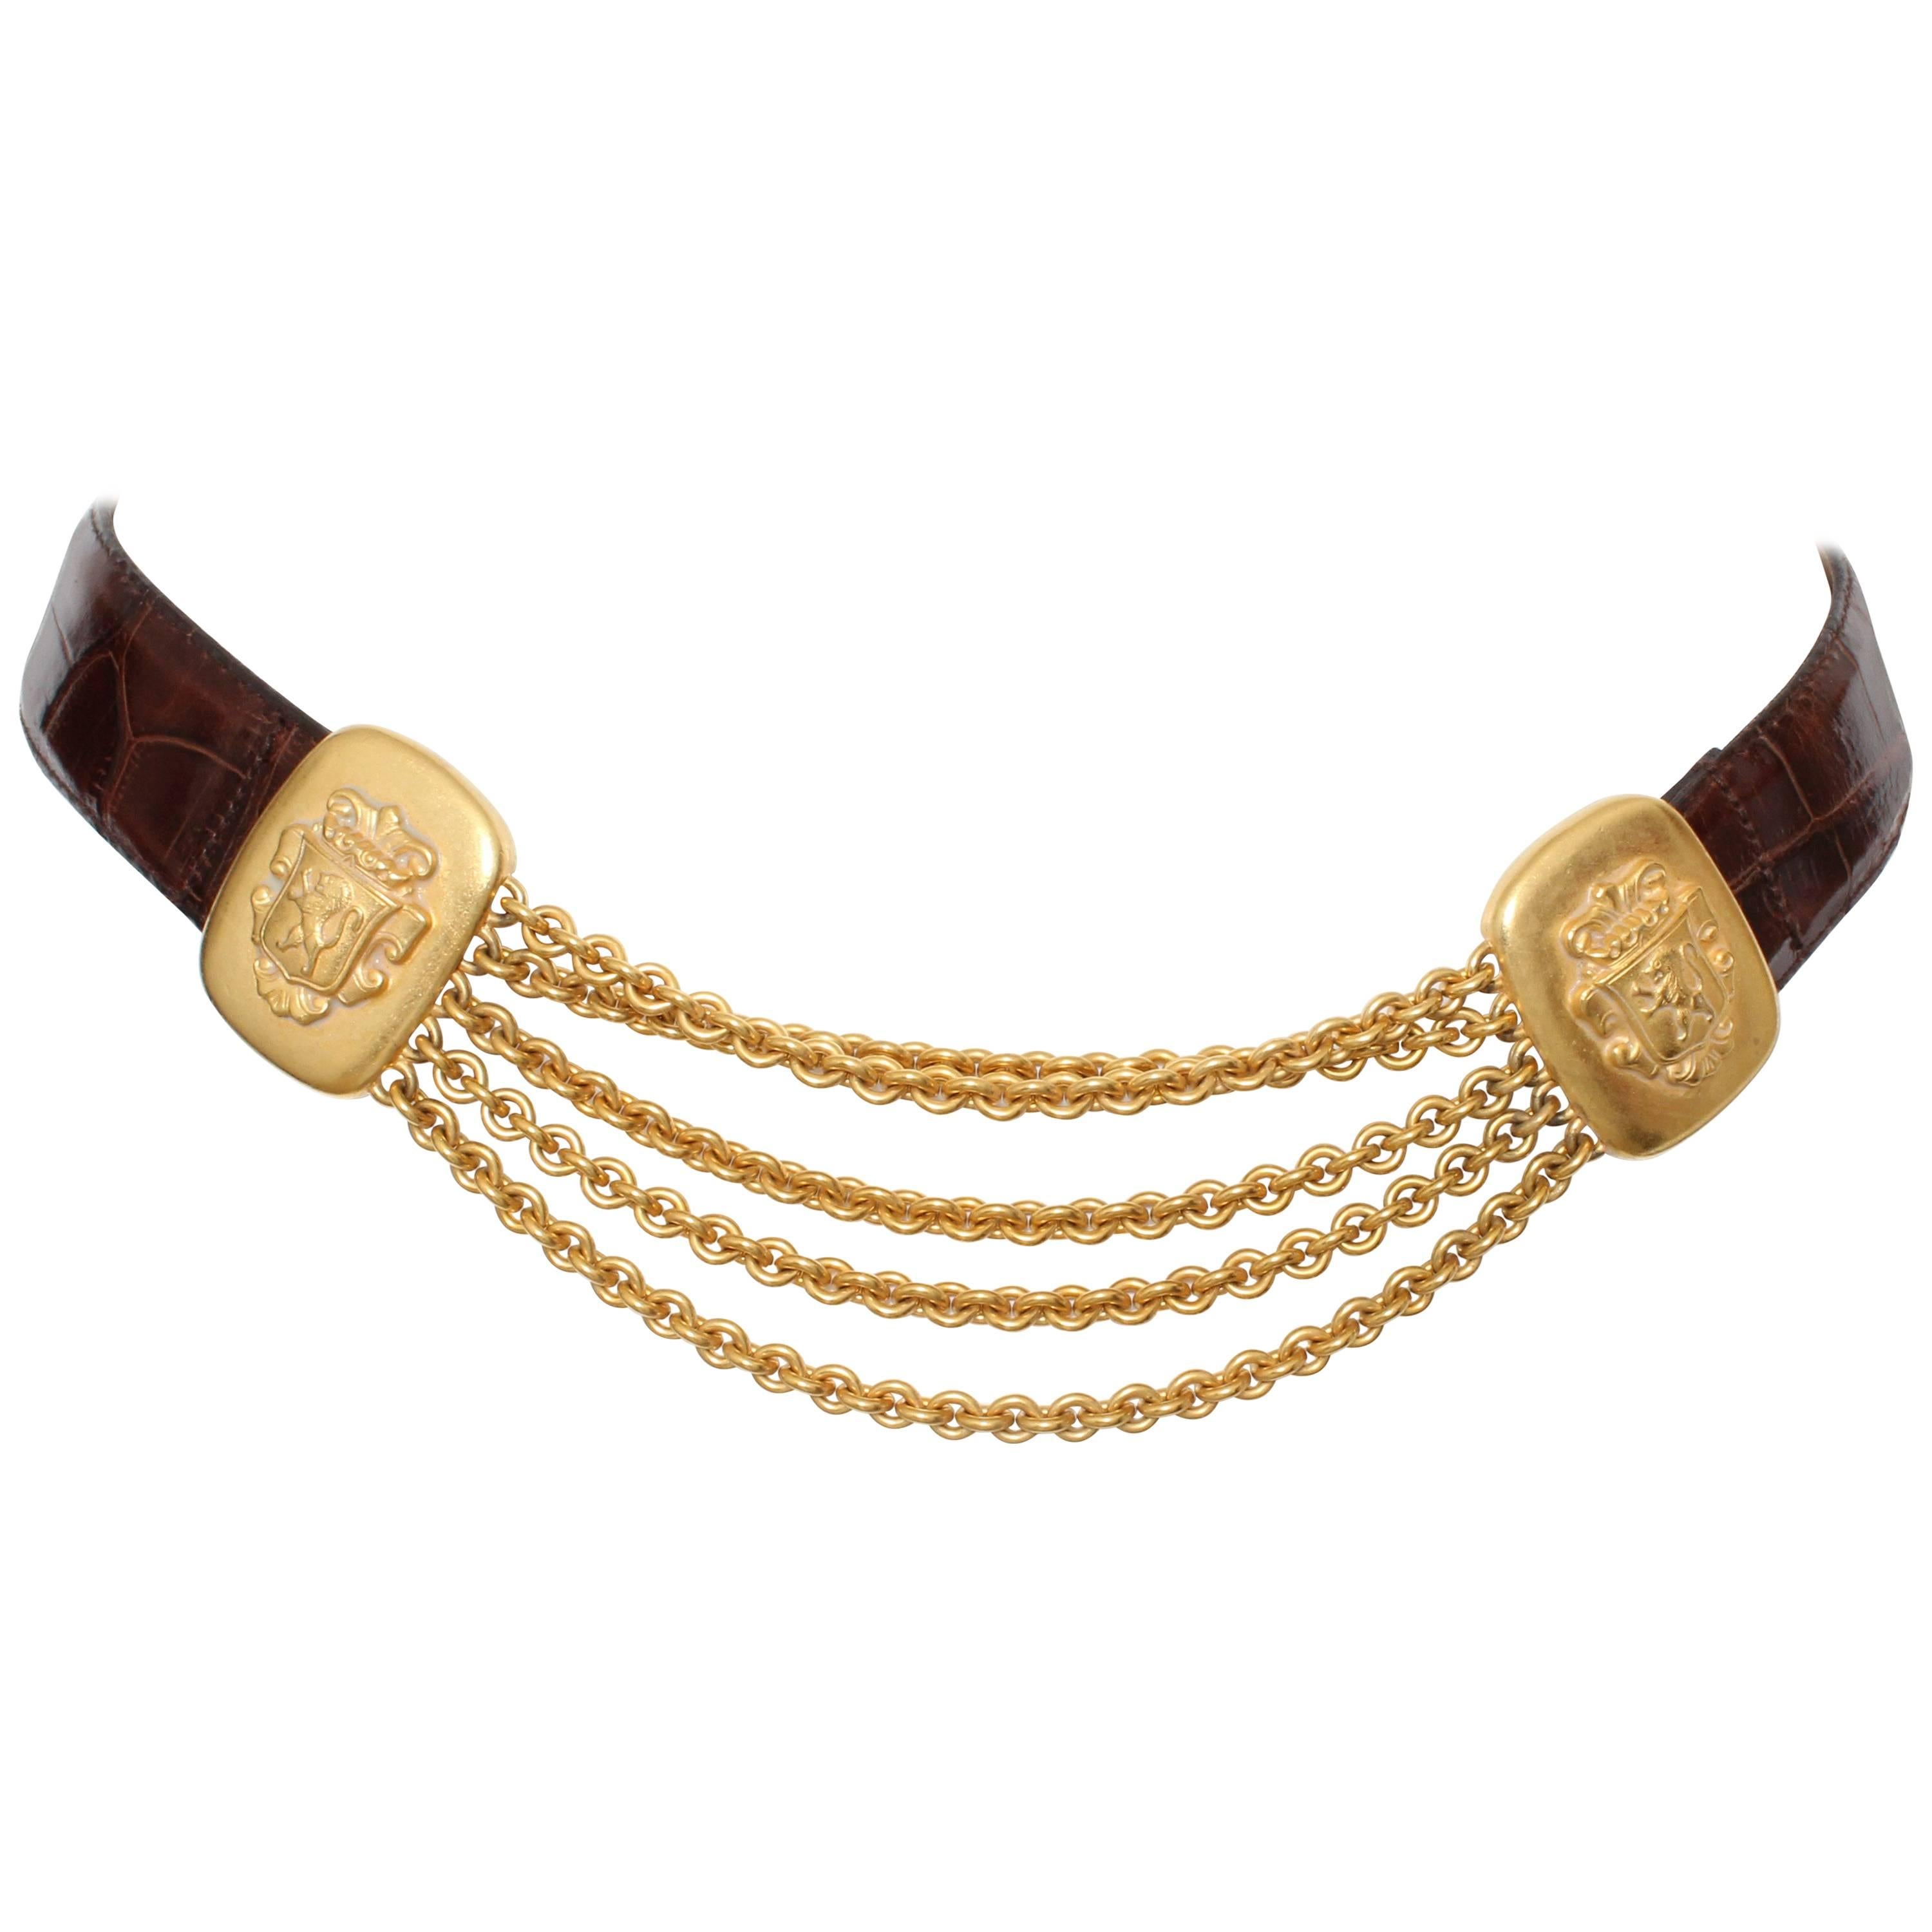 Ben Amun Isaac Manevitz Croc Embossed Leather Belt Lions Gold Chains Sz M